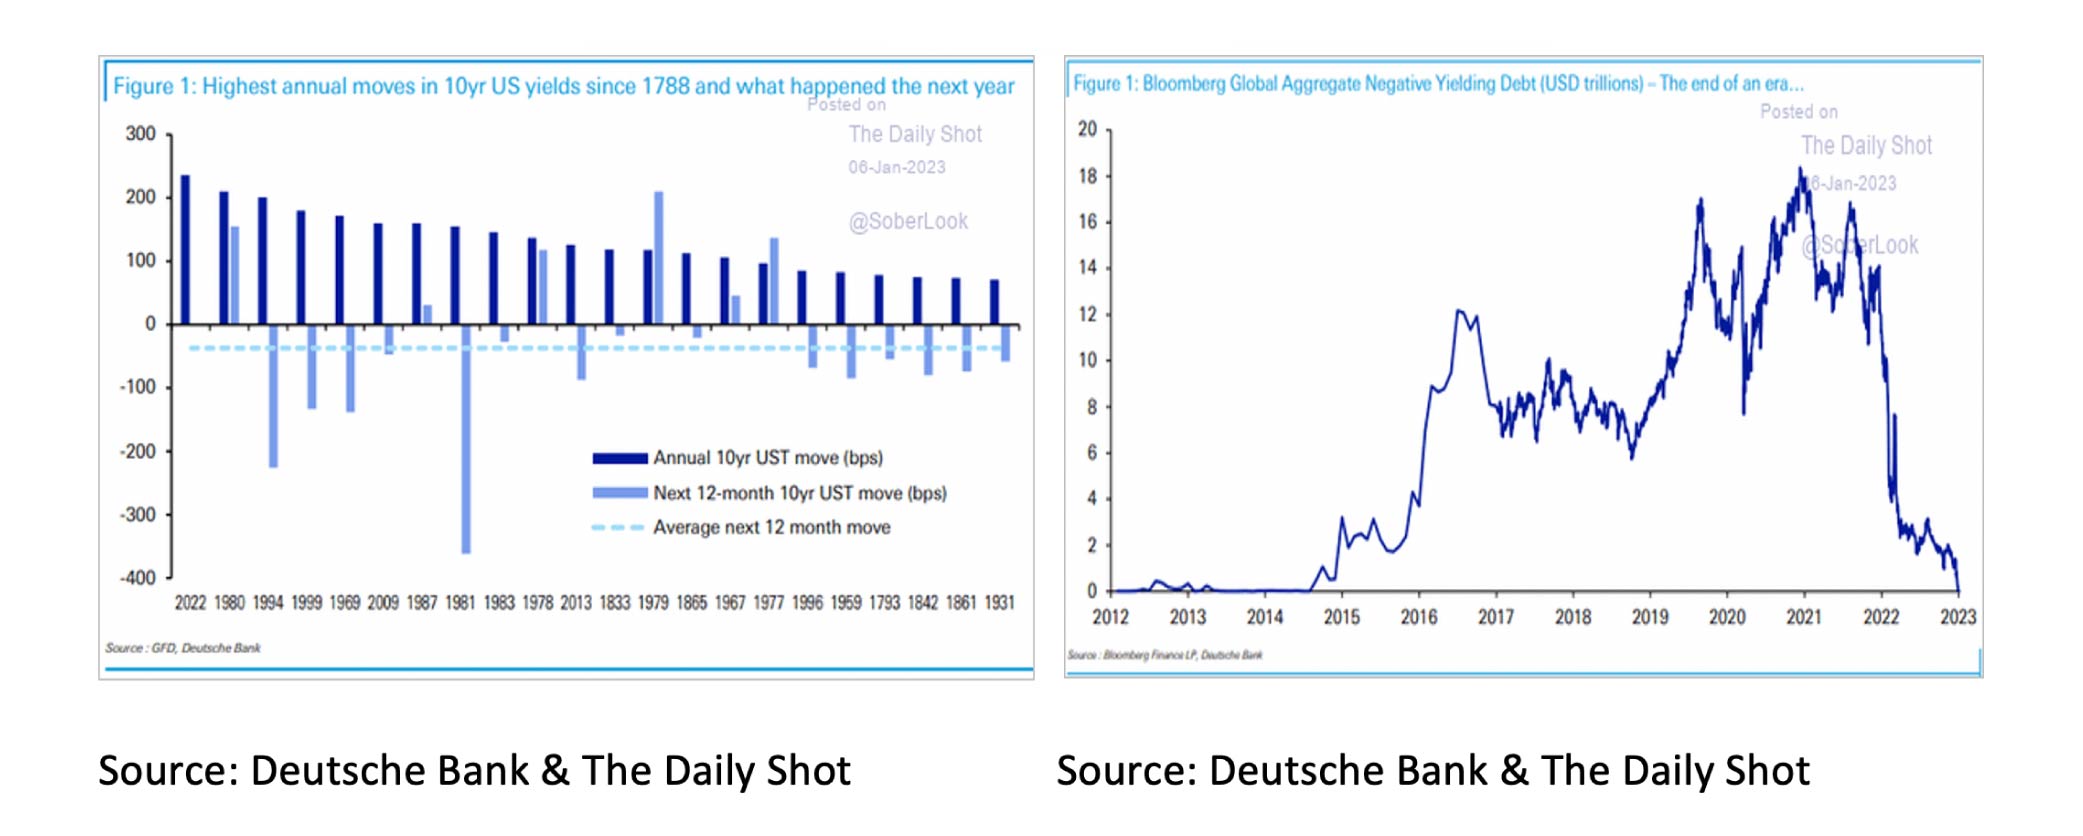 Bloomberg Global Aggregate Negative Yielding Debt